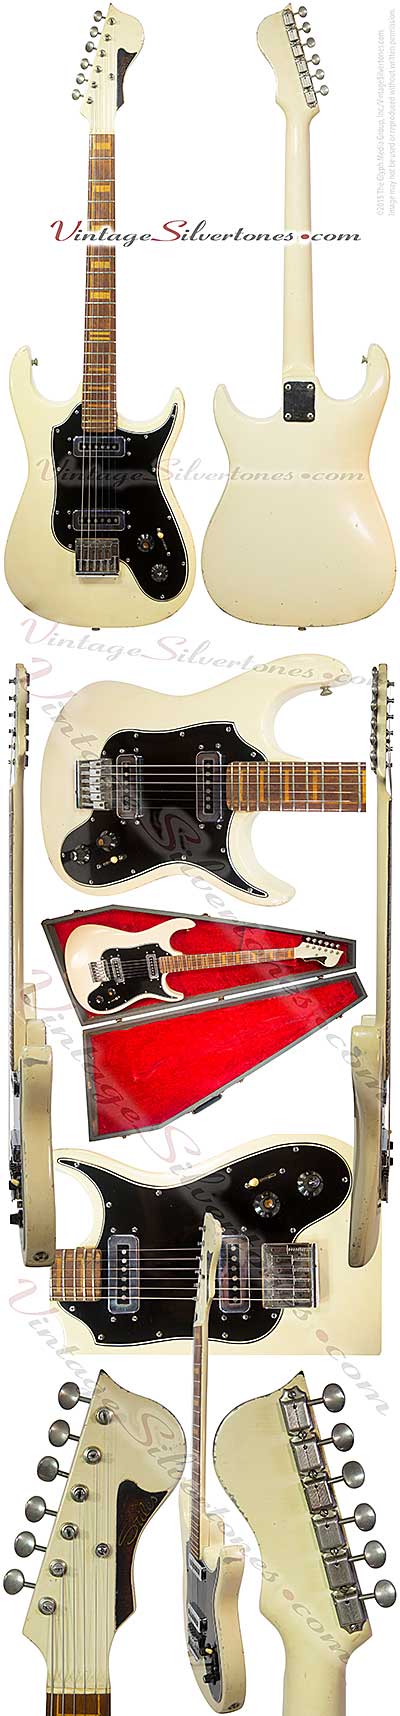 Stiles - solid body electric guitar, double cutaway, white finish,  2 pu, circa 1967